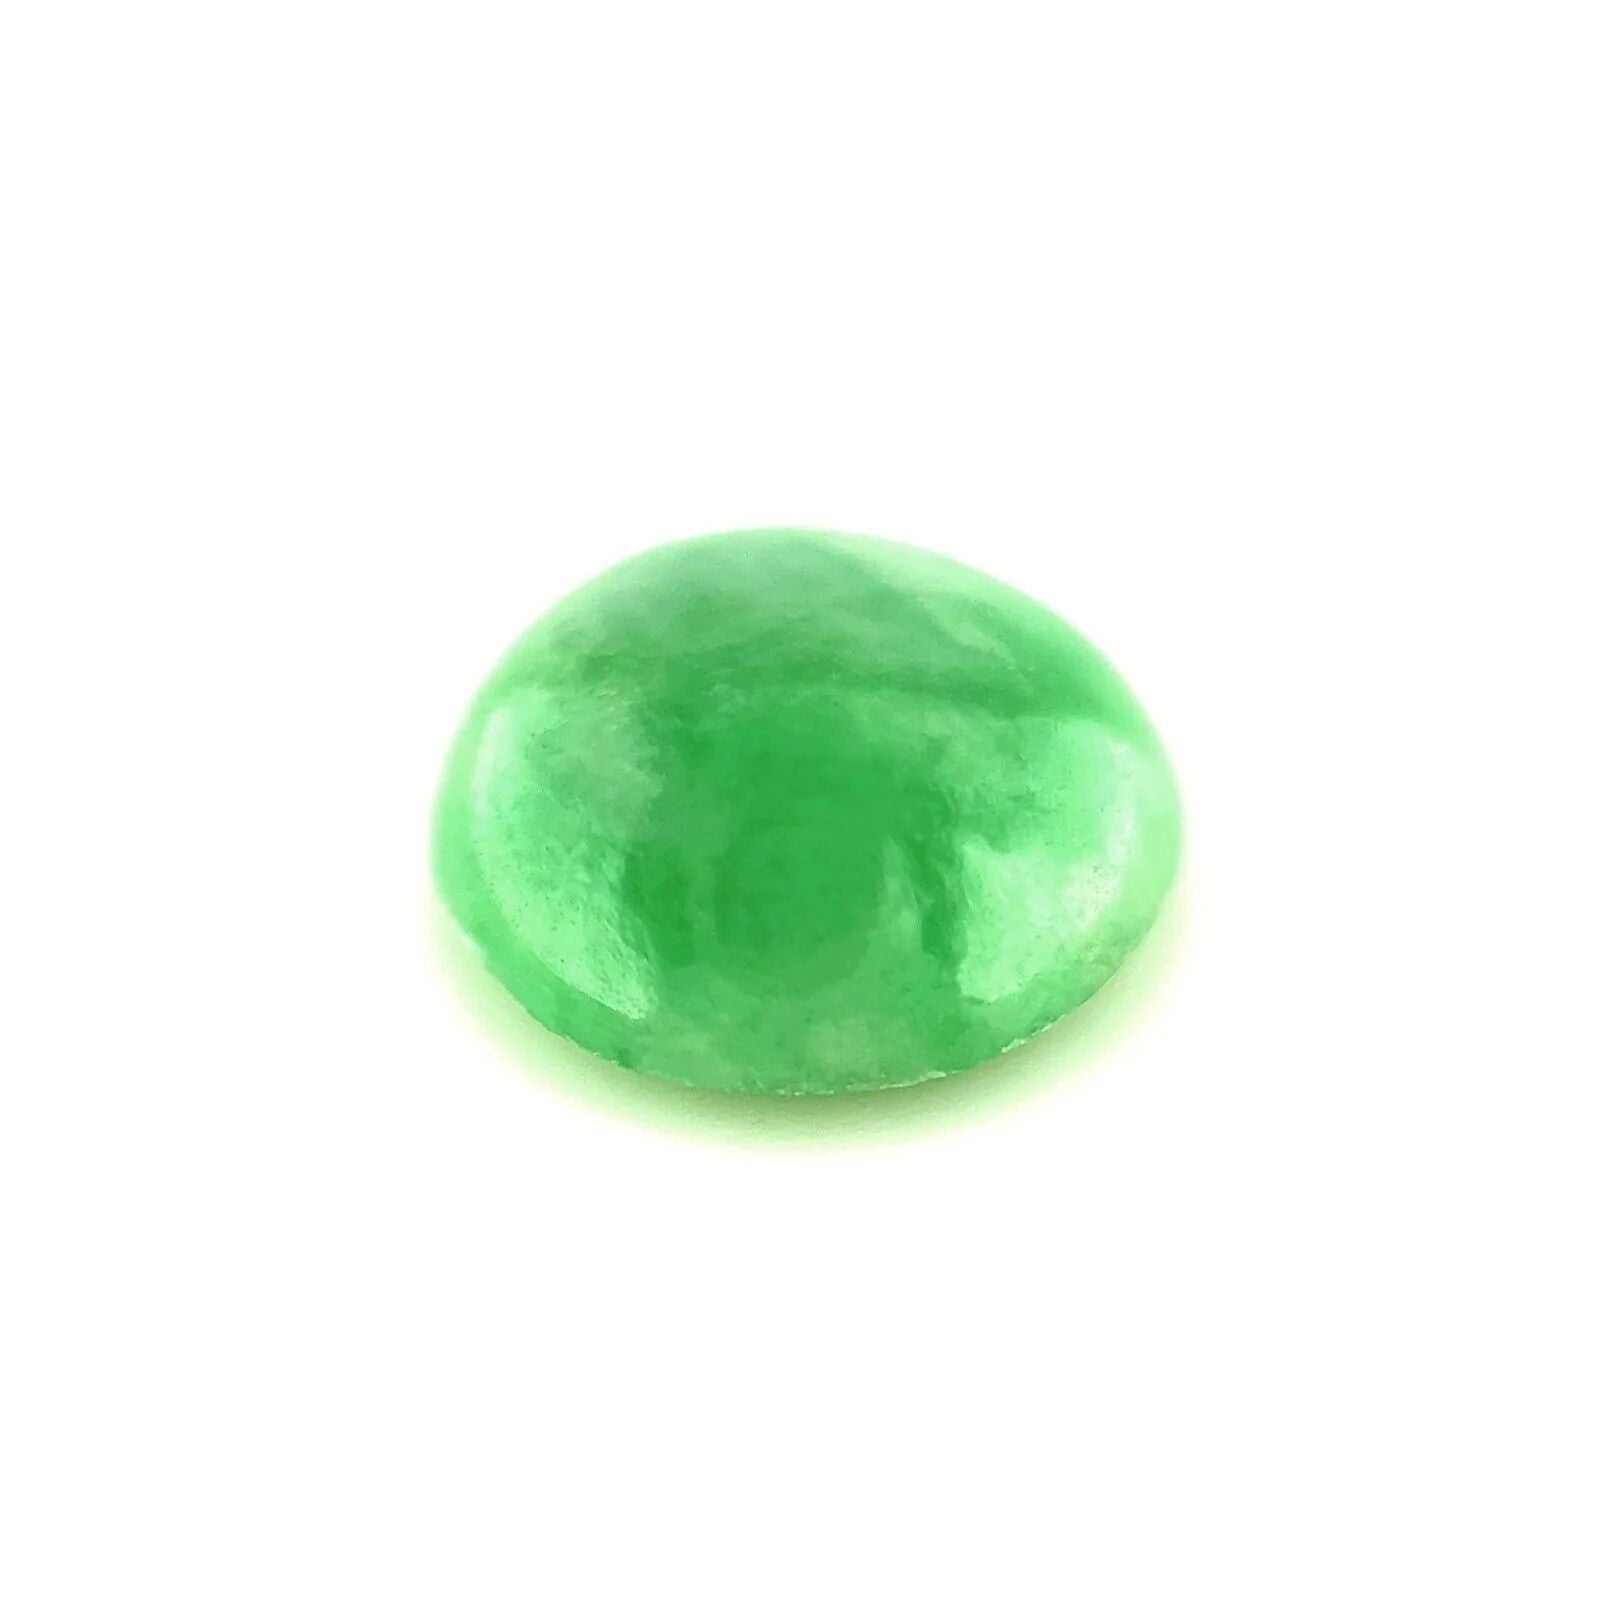 Rare 4.28ct IGI Certified Green Jadeite Jade ‘A’ Grade Oval Cabochon Loose Gem For Sale